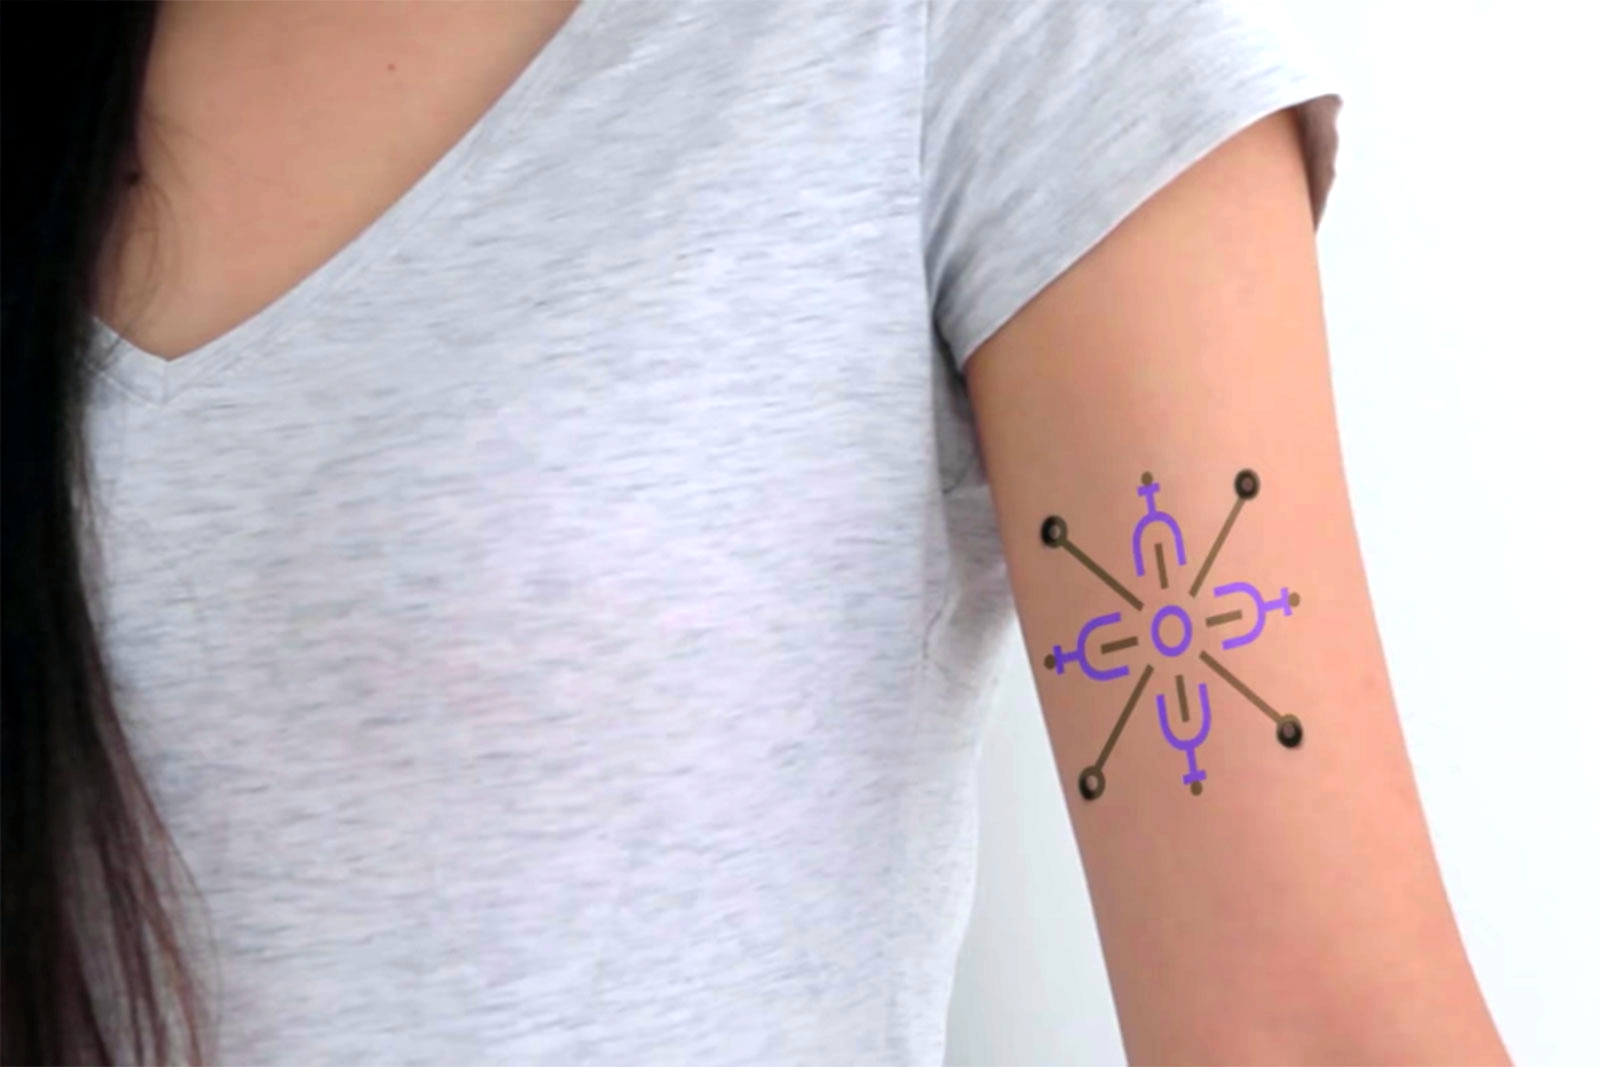 smart tatooos for health